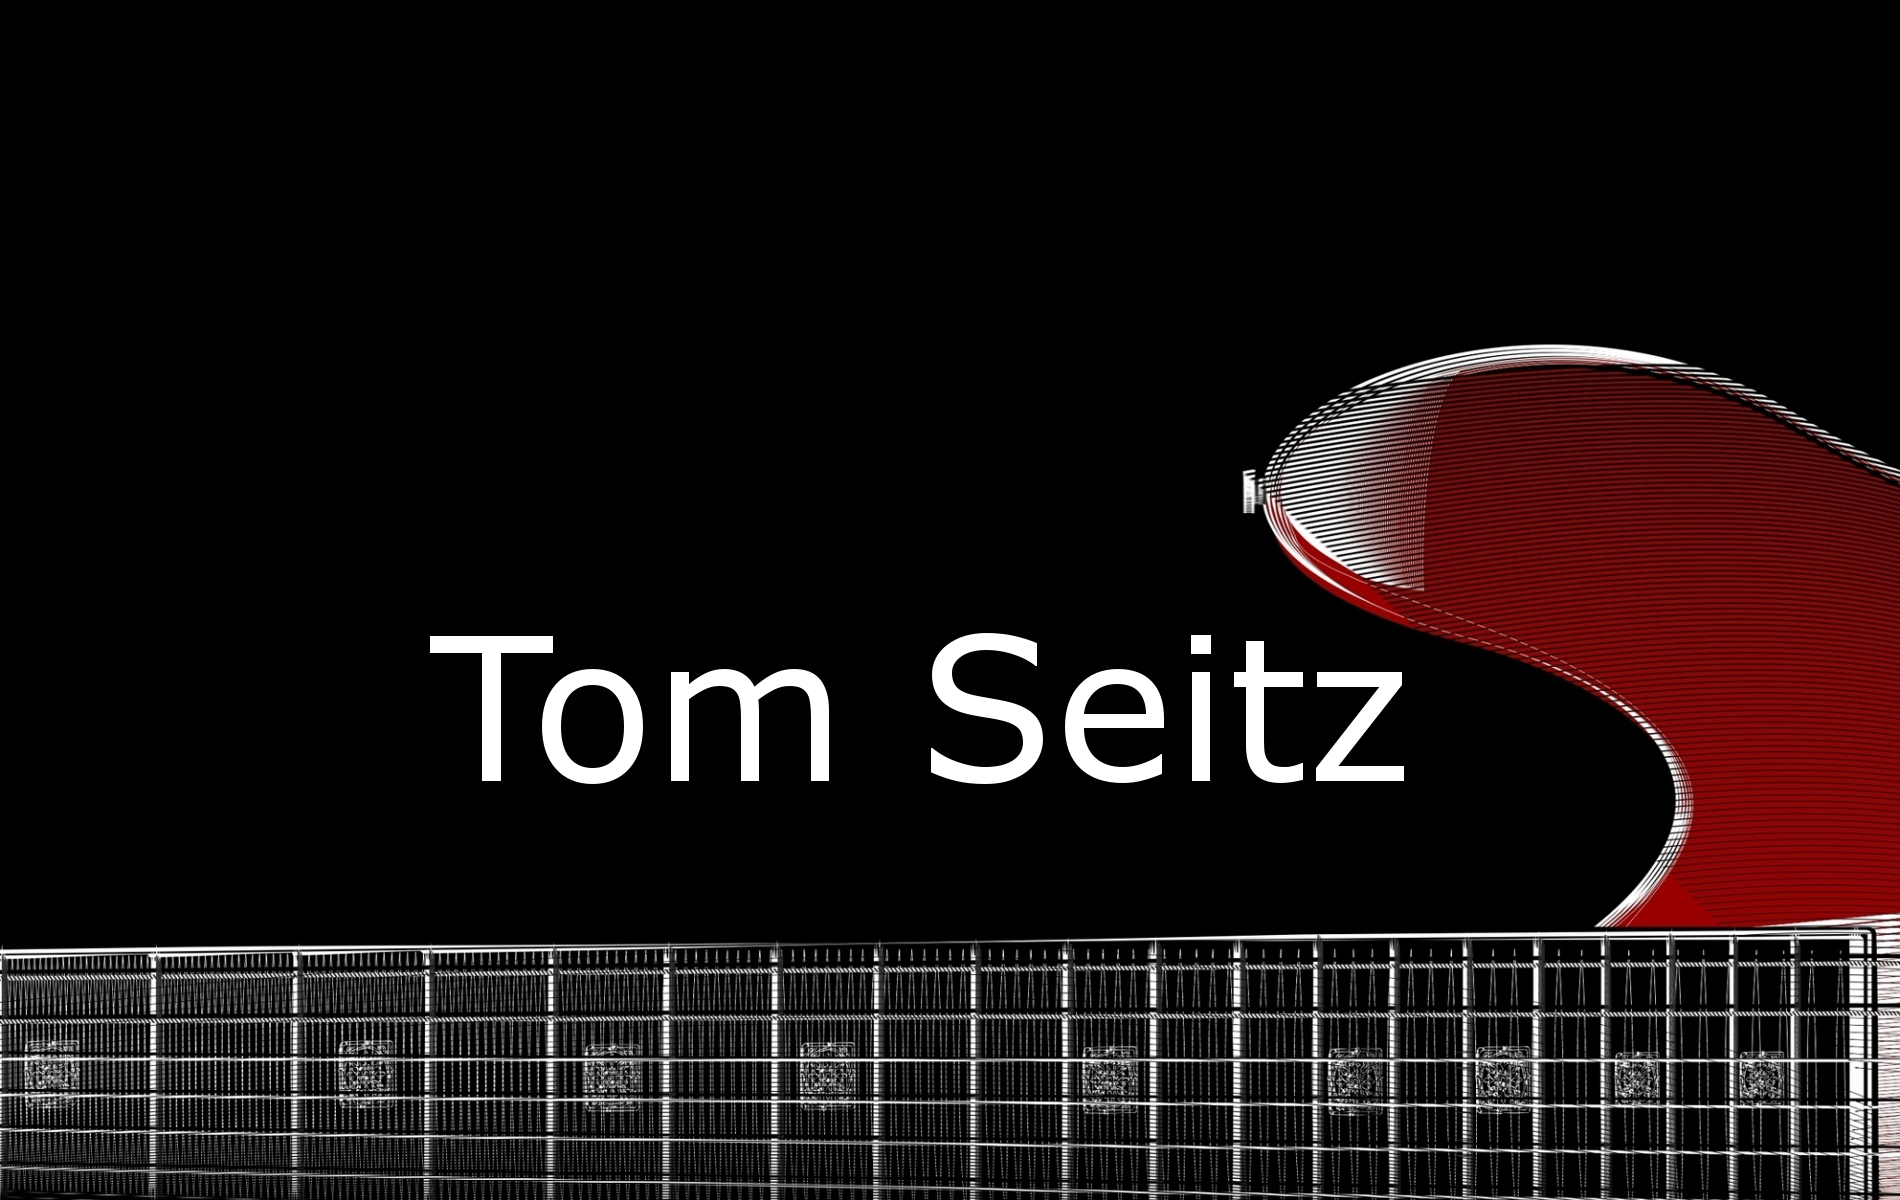 Tom Seitz